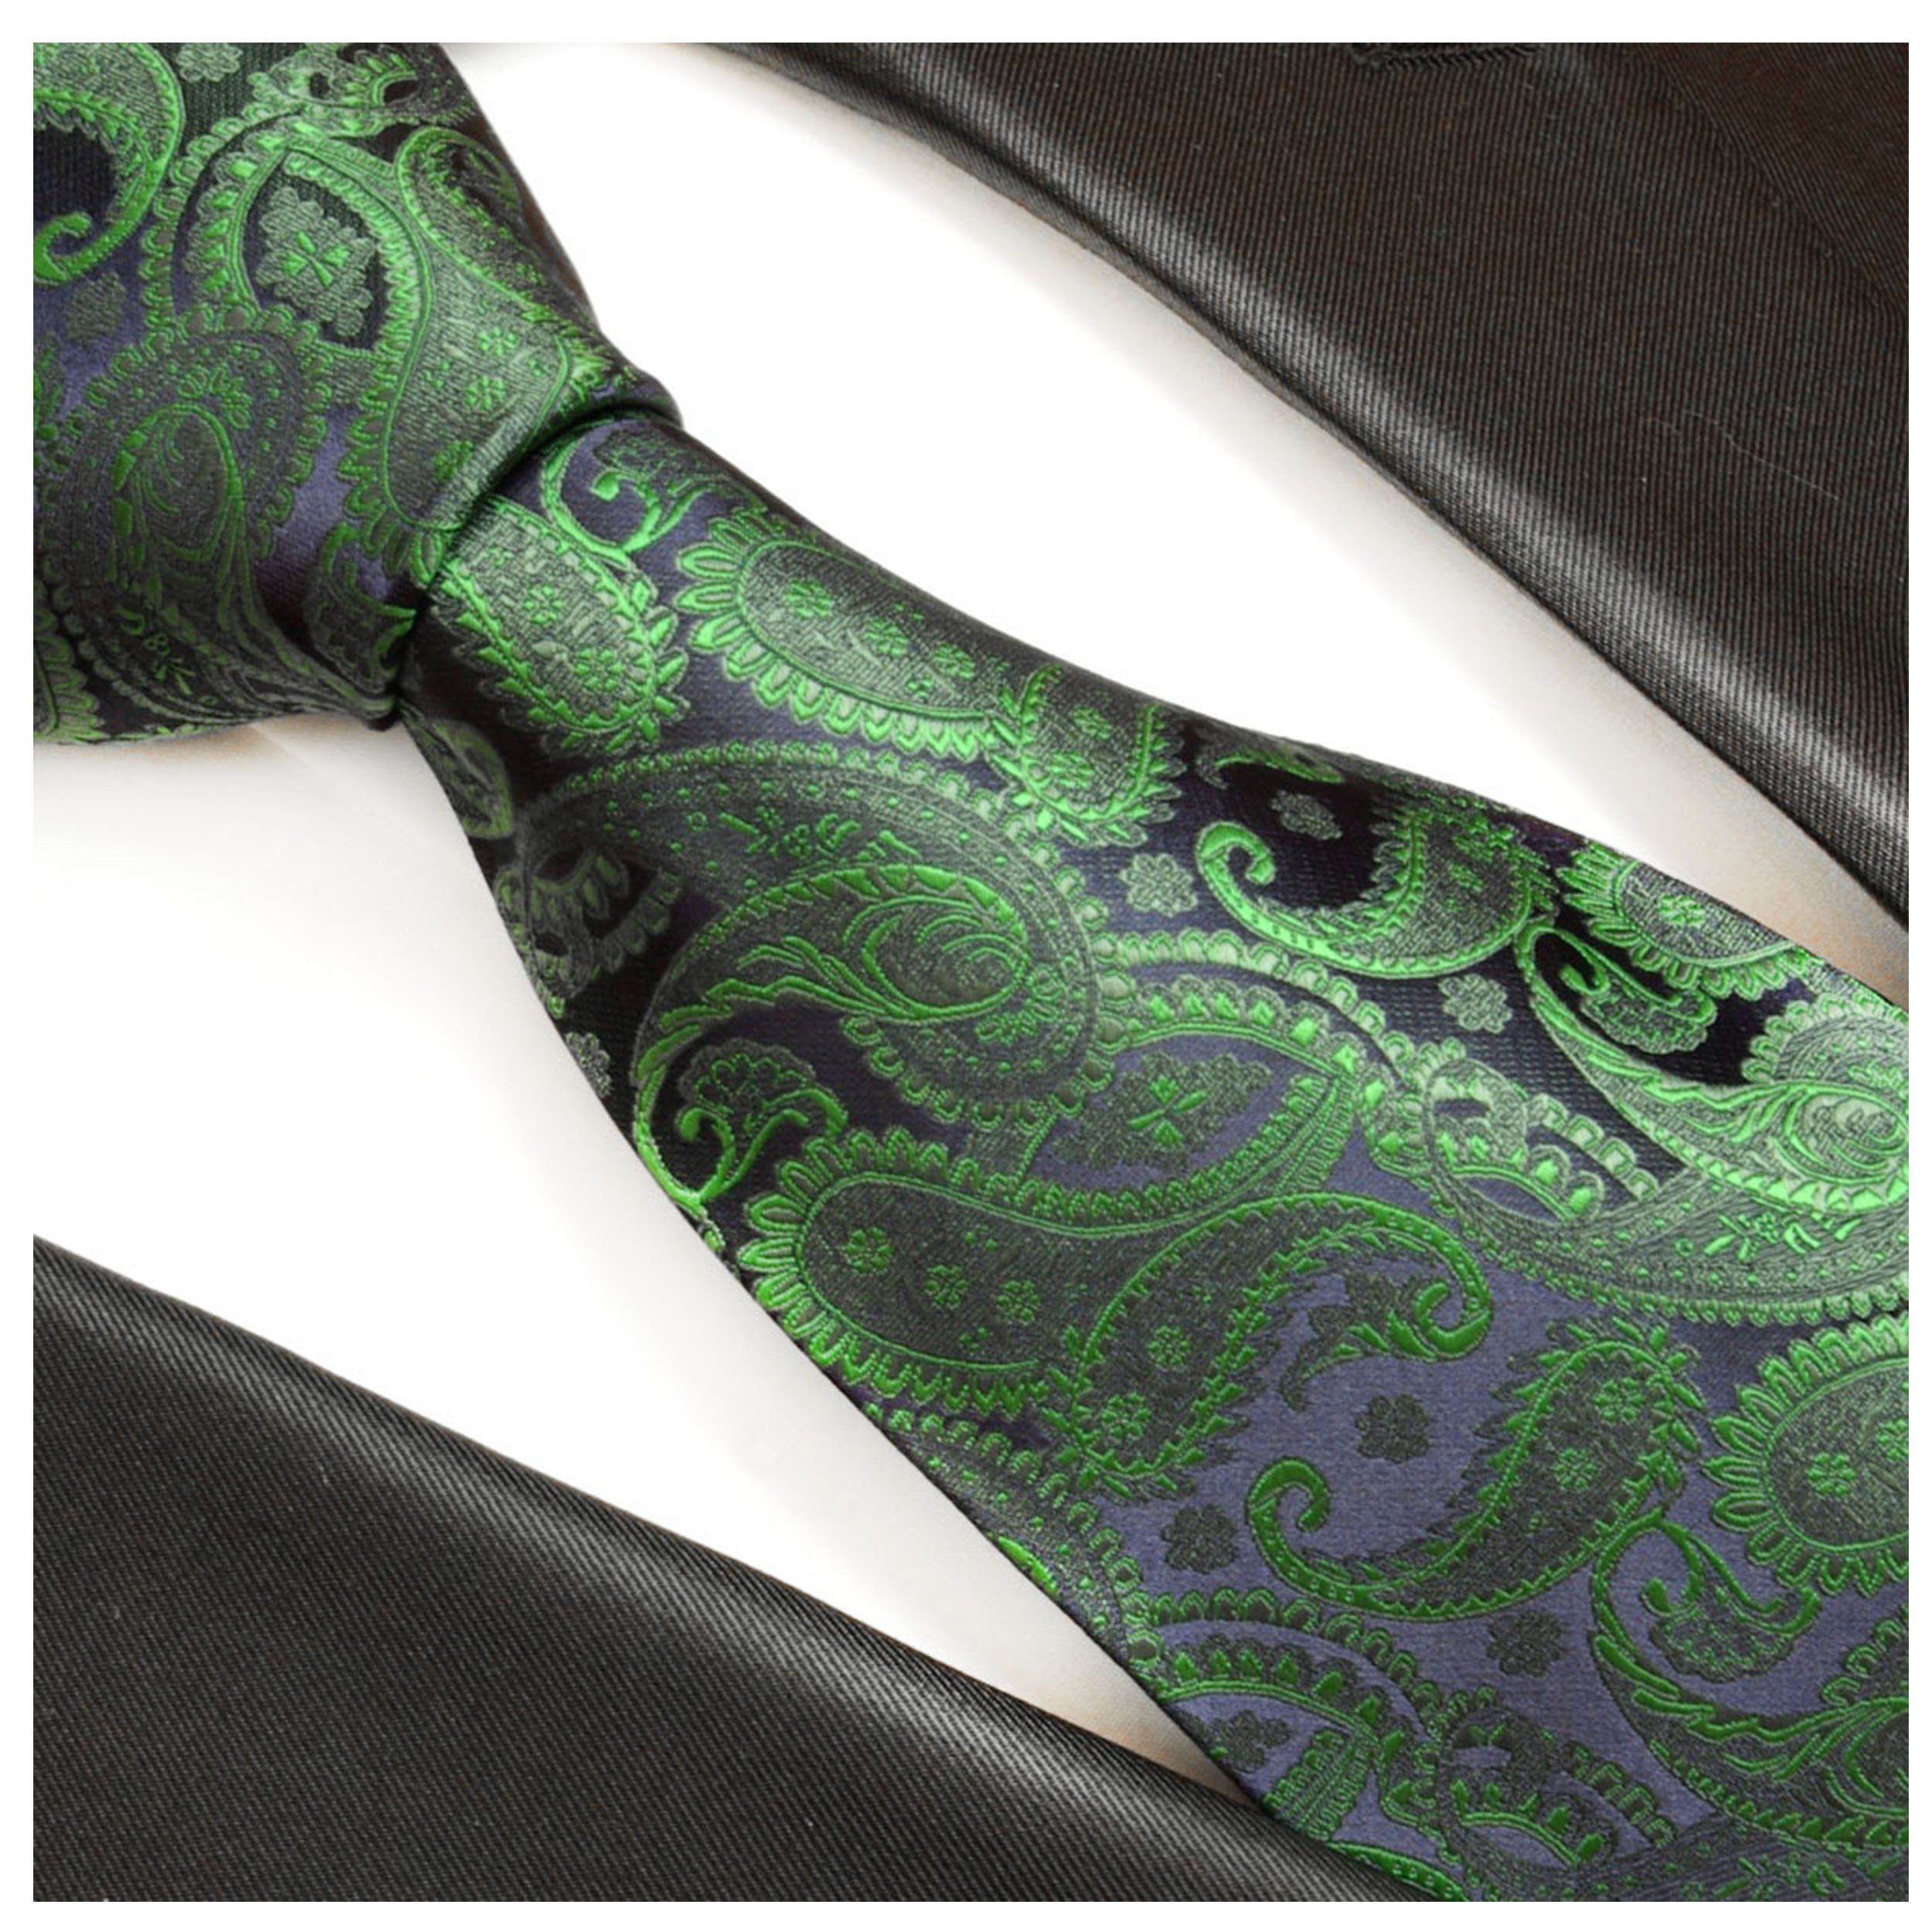 Paul Malone Krawatte Herren Mikrofaser grün Schmal Bräutigam paisley - (6cm), V14 - Hochzeitskrawatte